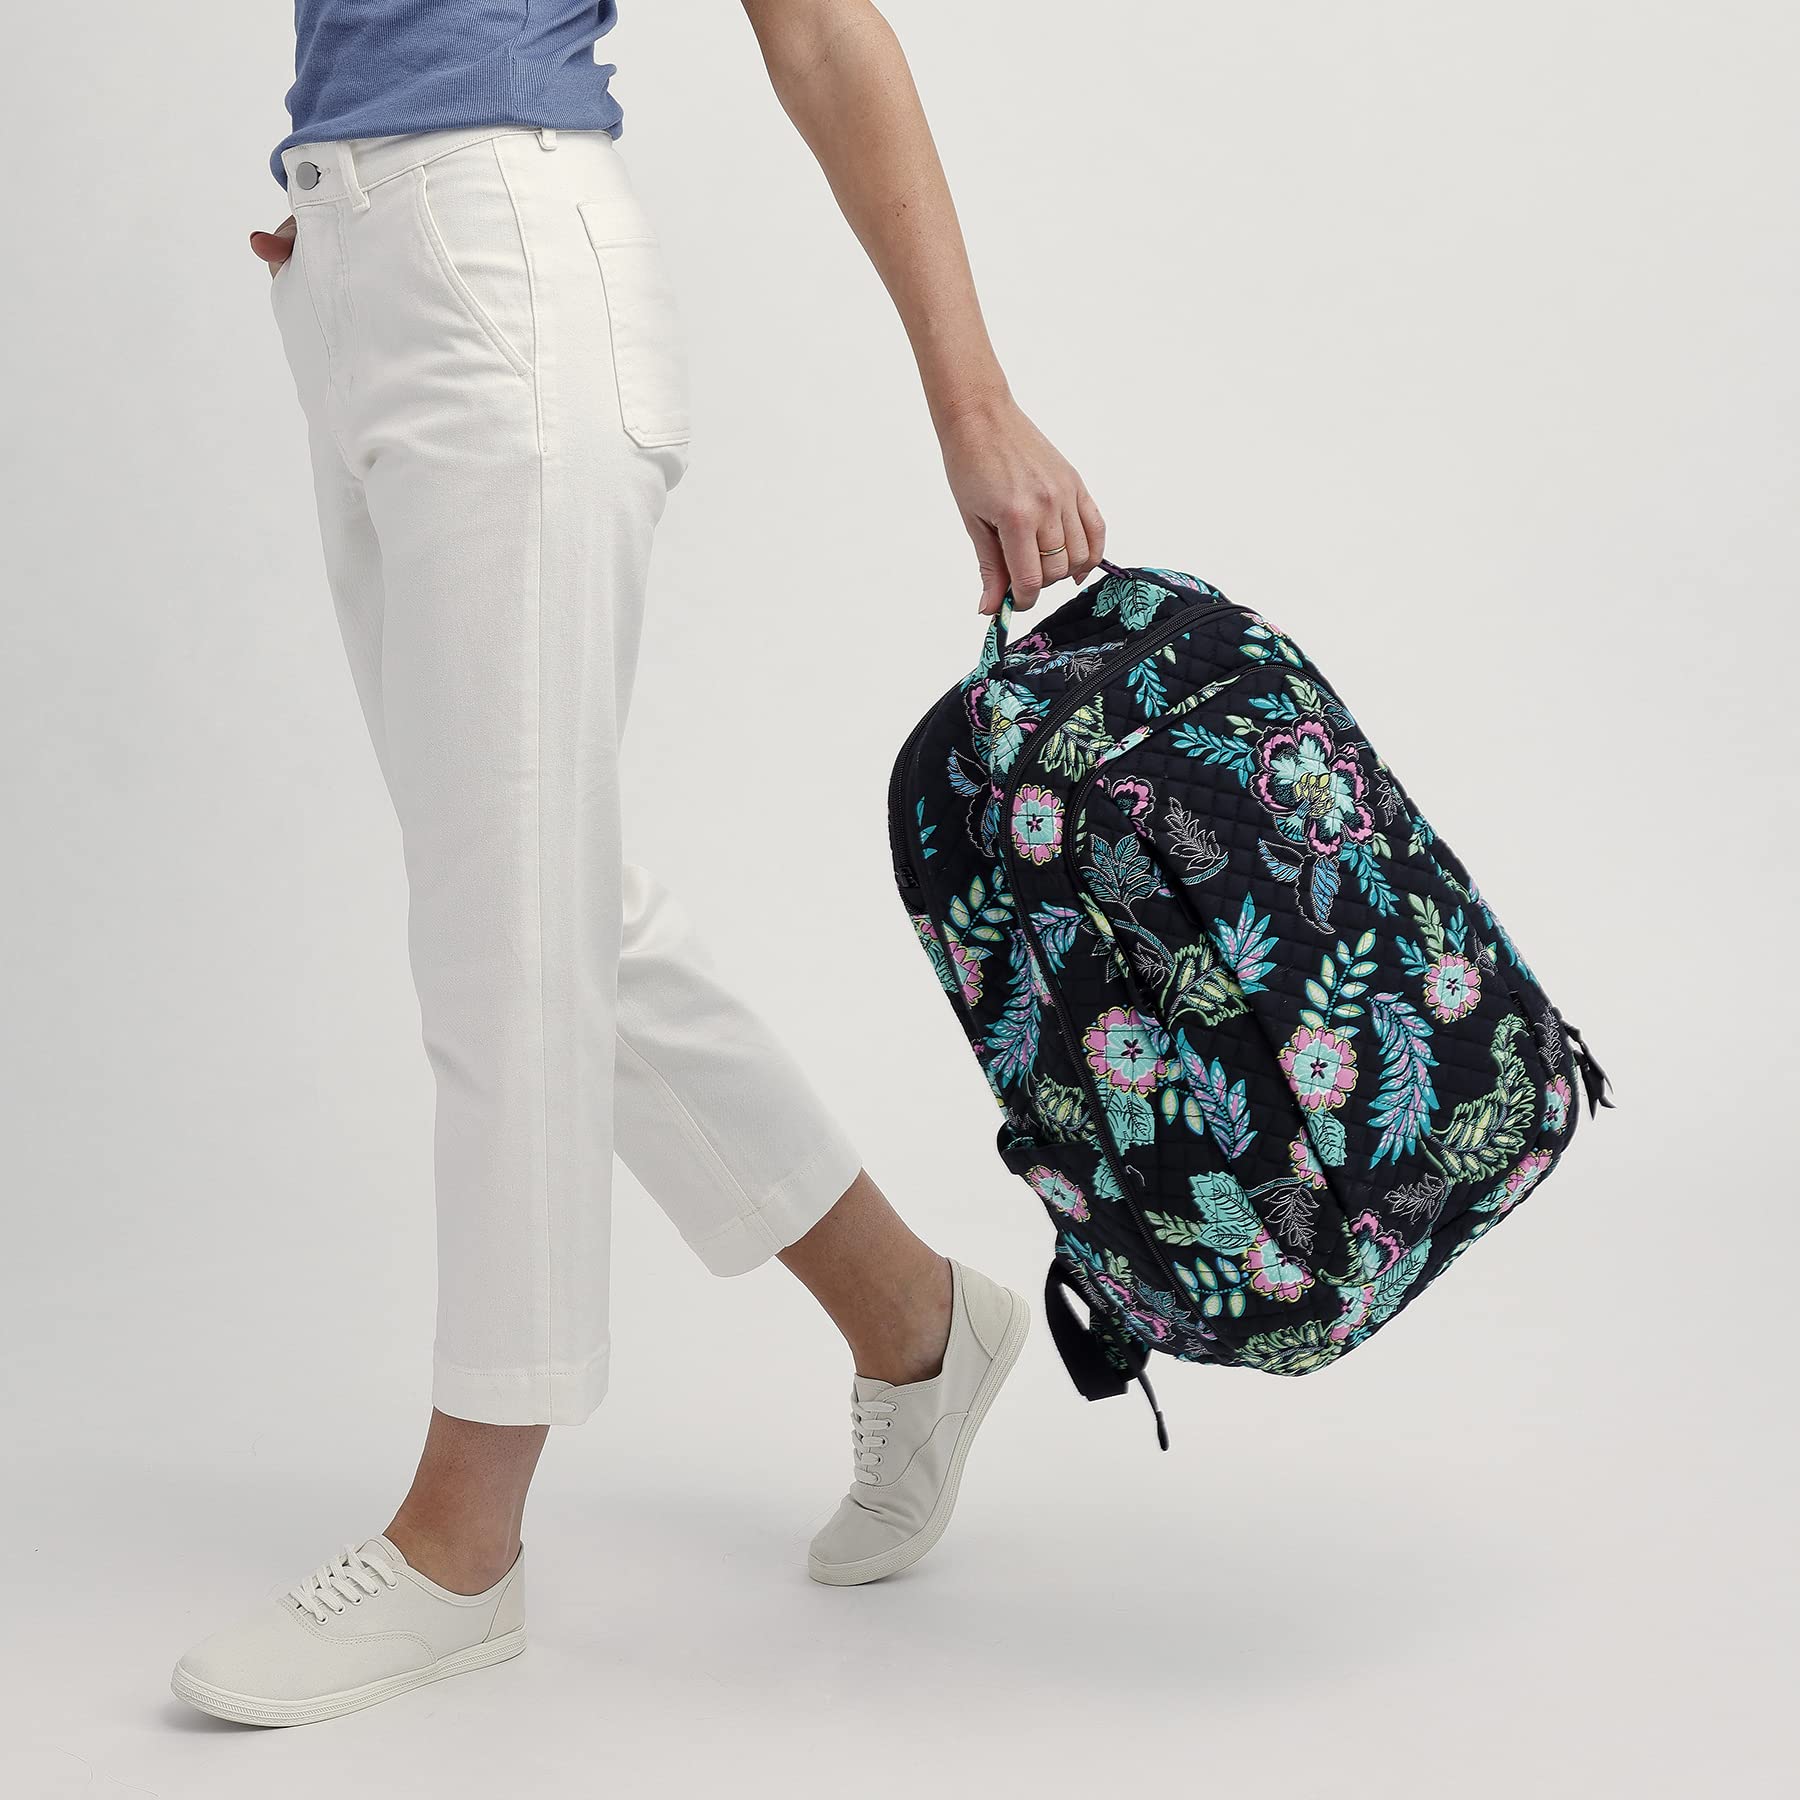 Vera Bradley Women's, Cotton Large Travel Backpack Travel Bag, Botanical Paisley, One Size